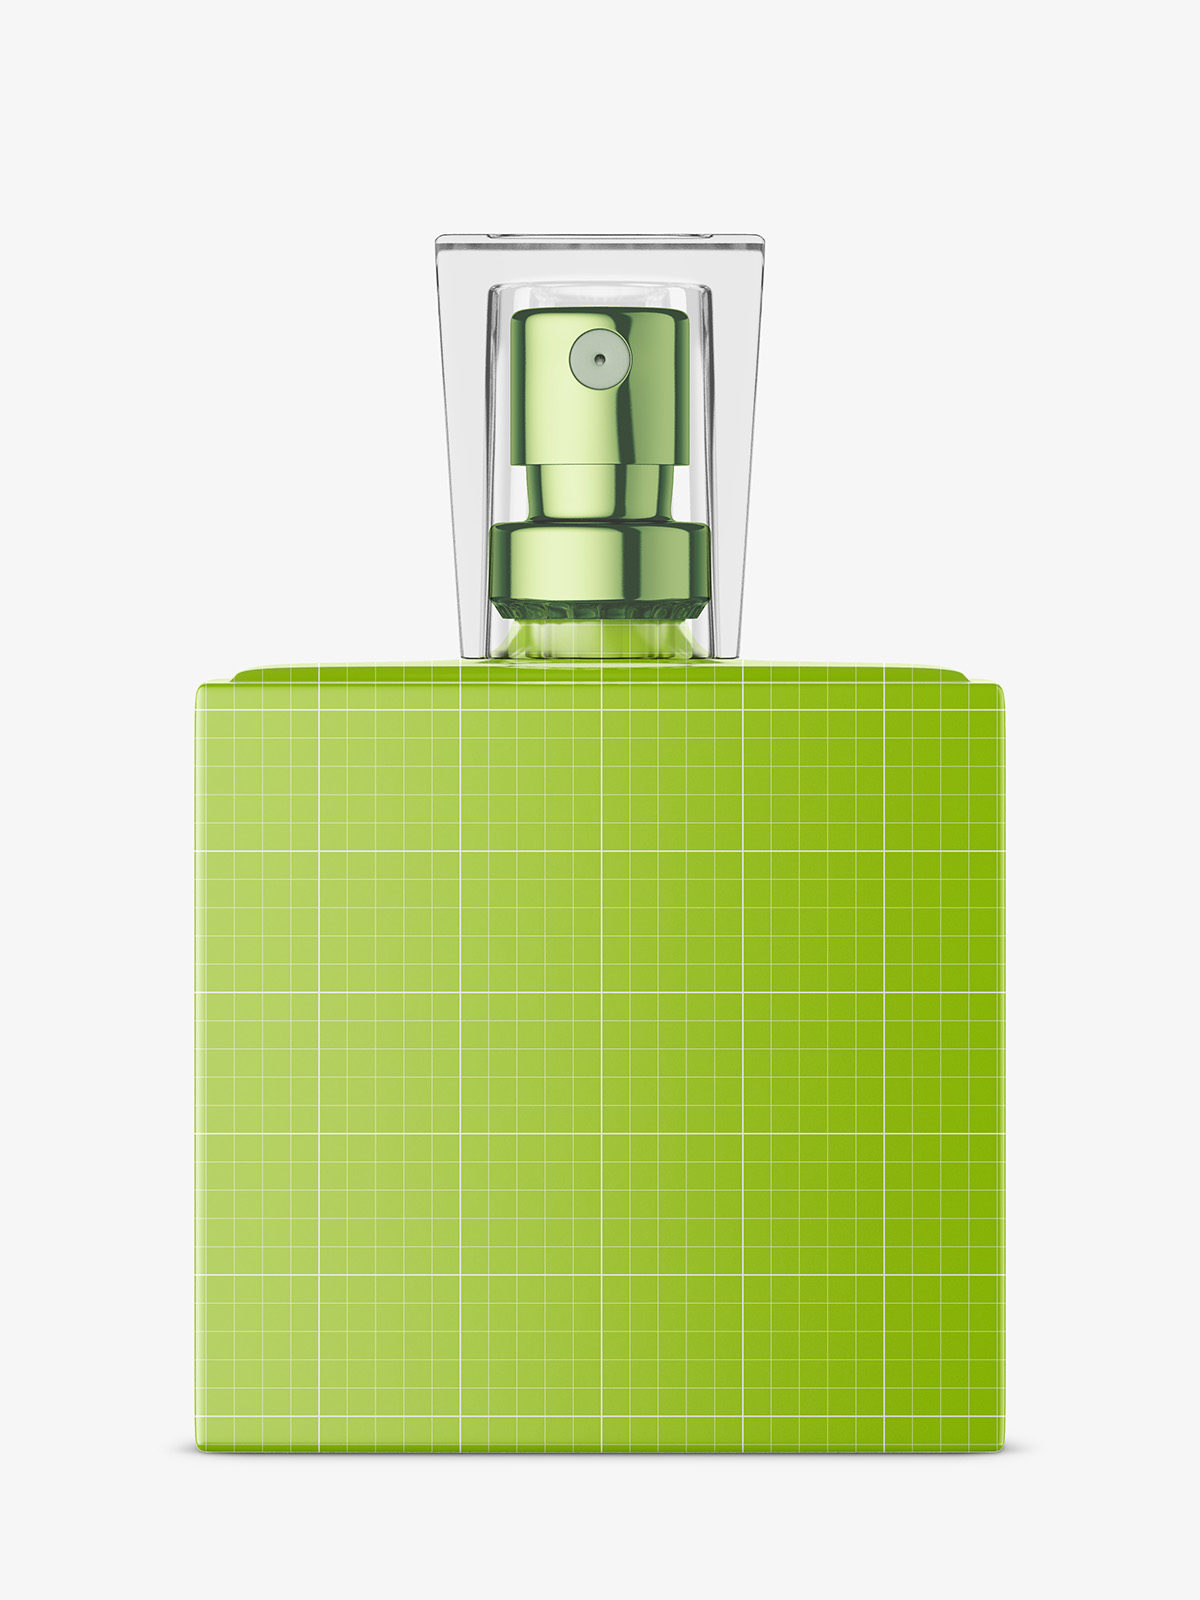 Download Glass Perfume Bottle Mockup Smarty Mockups